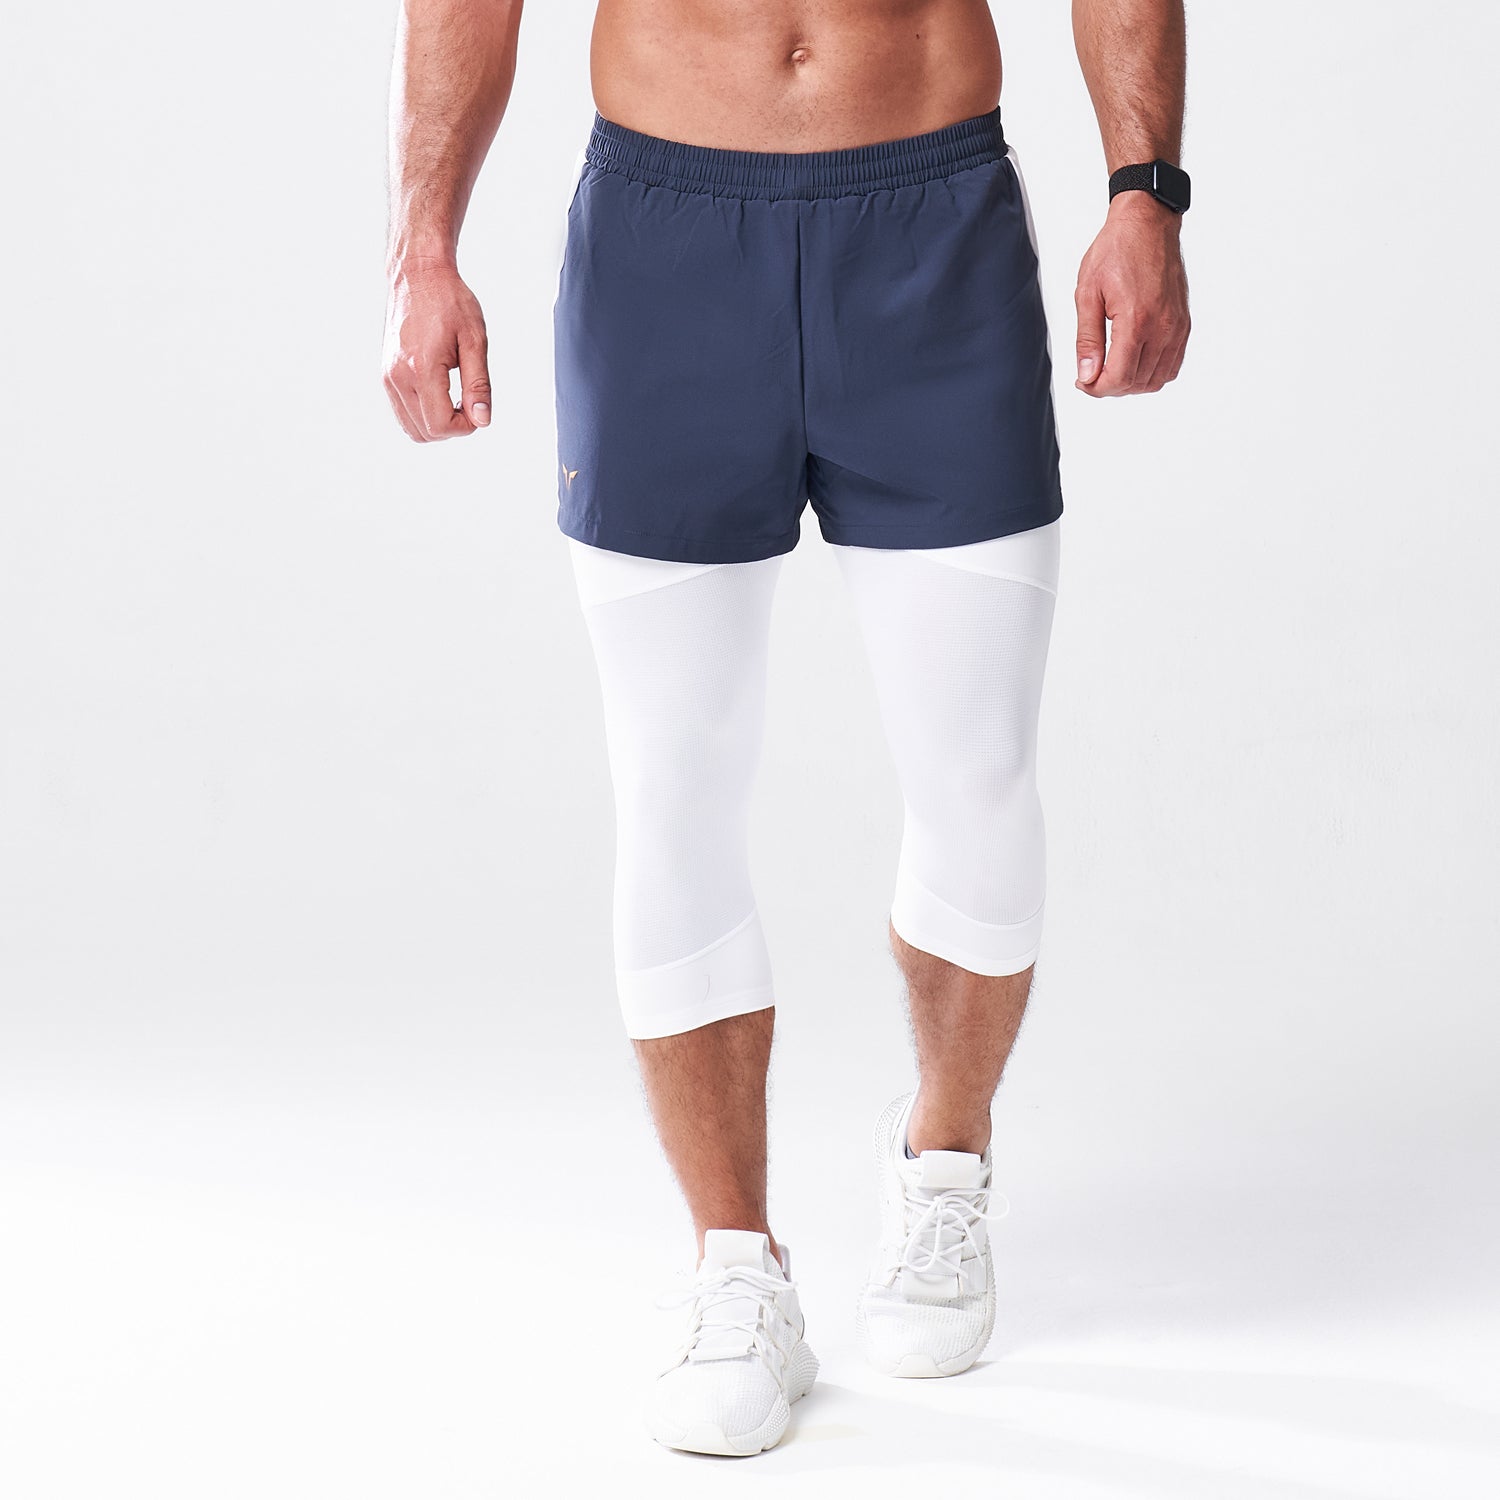 squatwolf-gym-wear-lab-360-2-in-1-legging-shorts-blue-workout-shorts-for-men